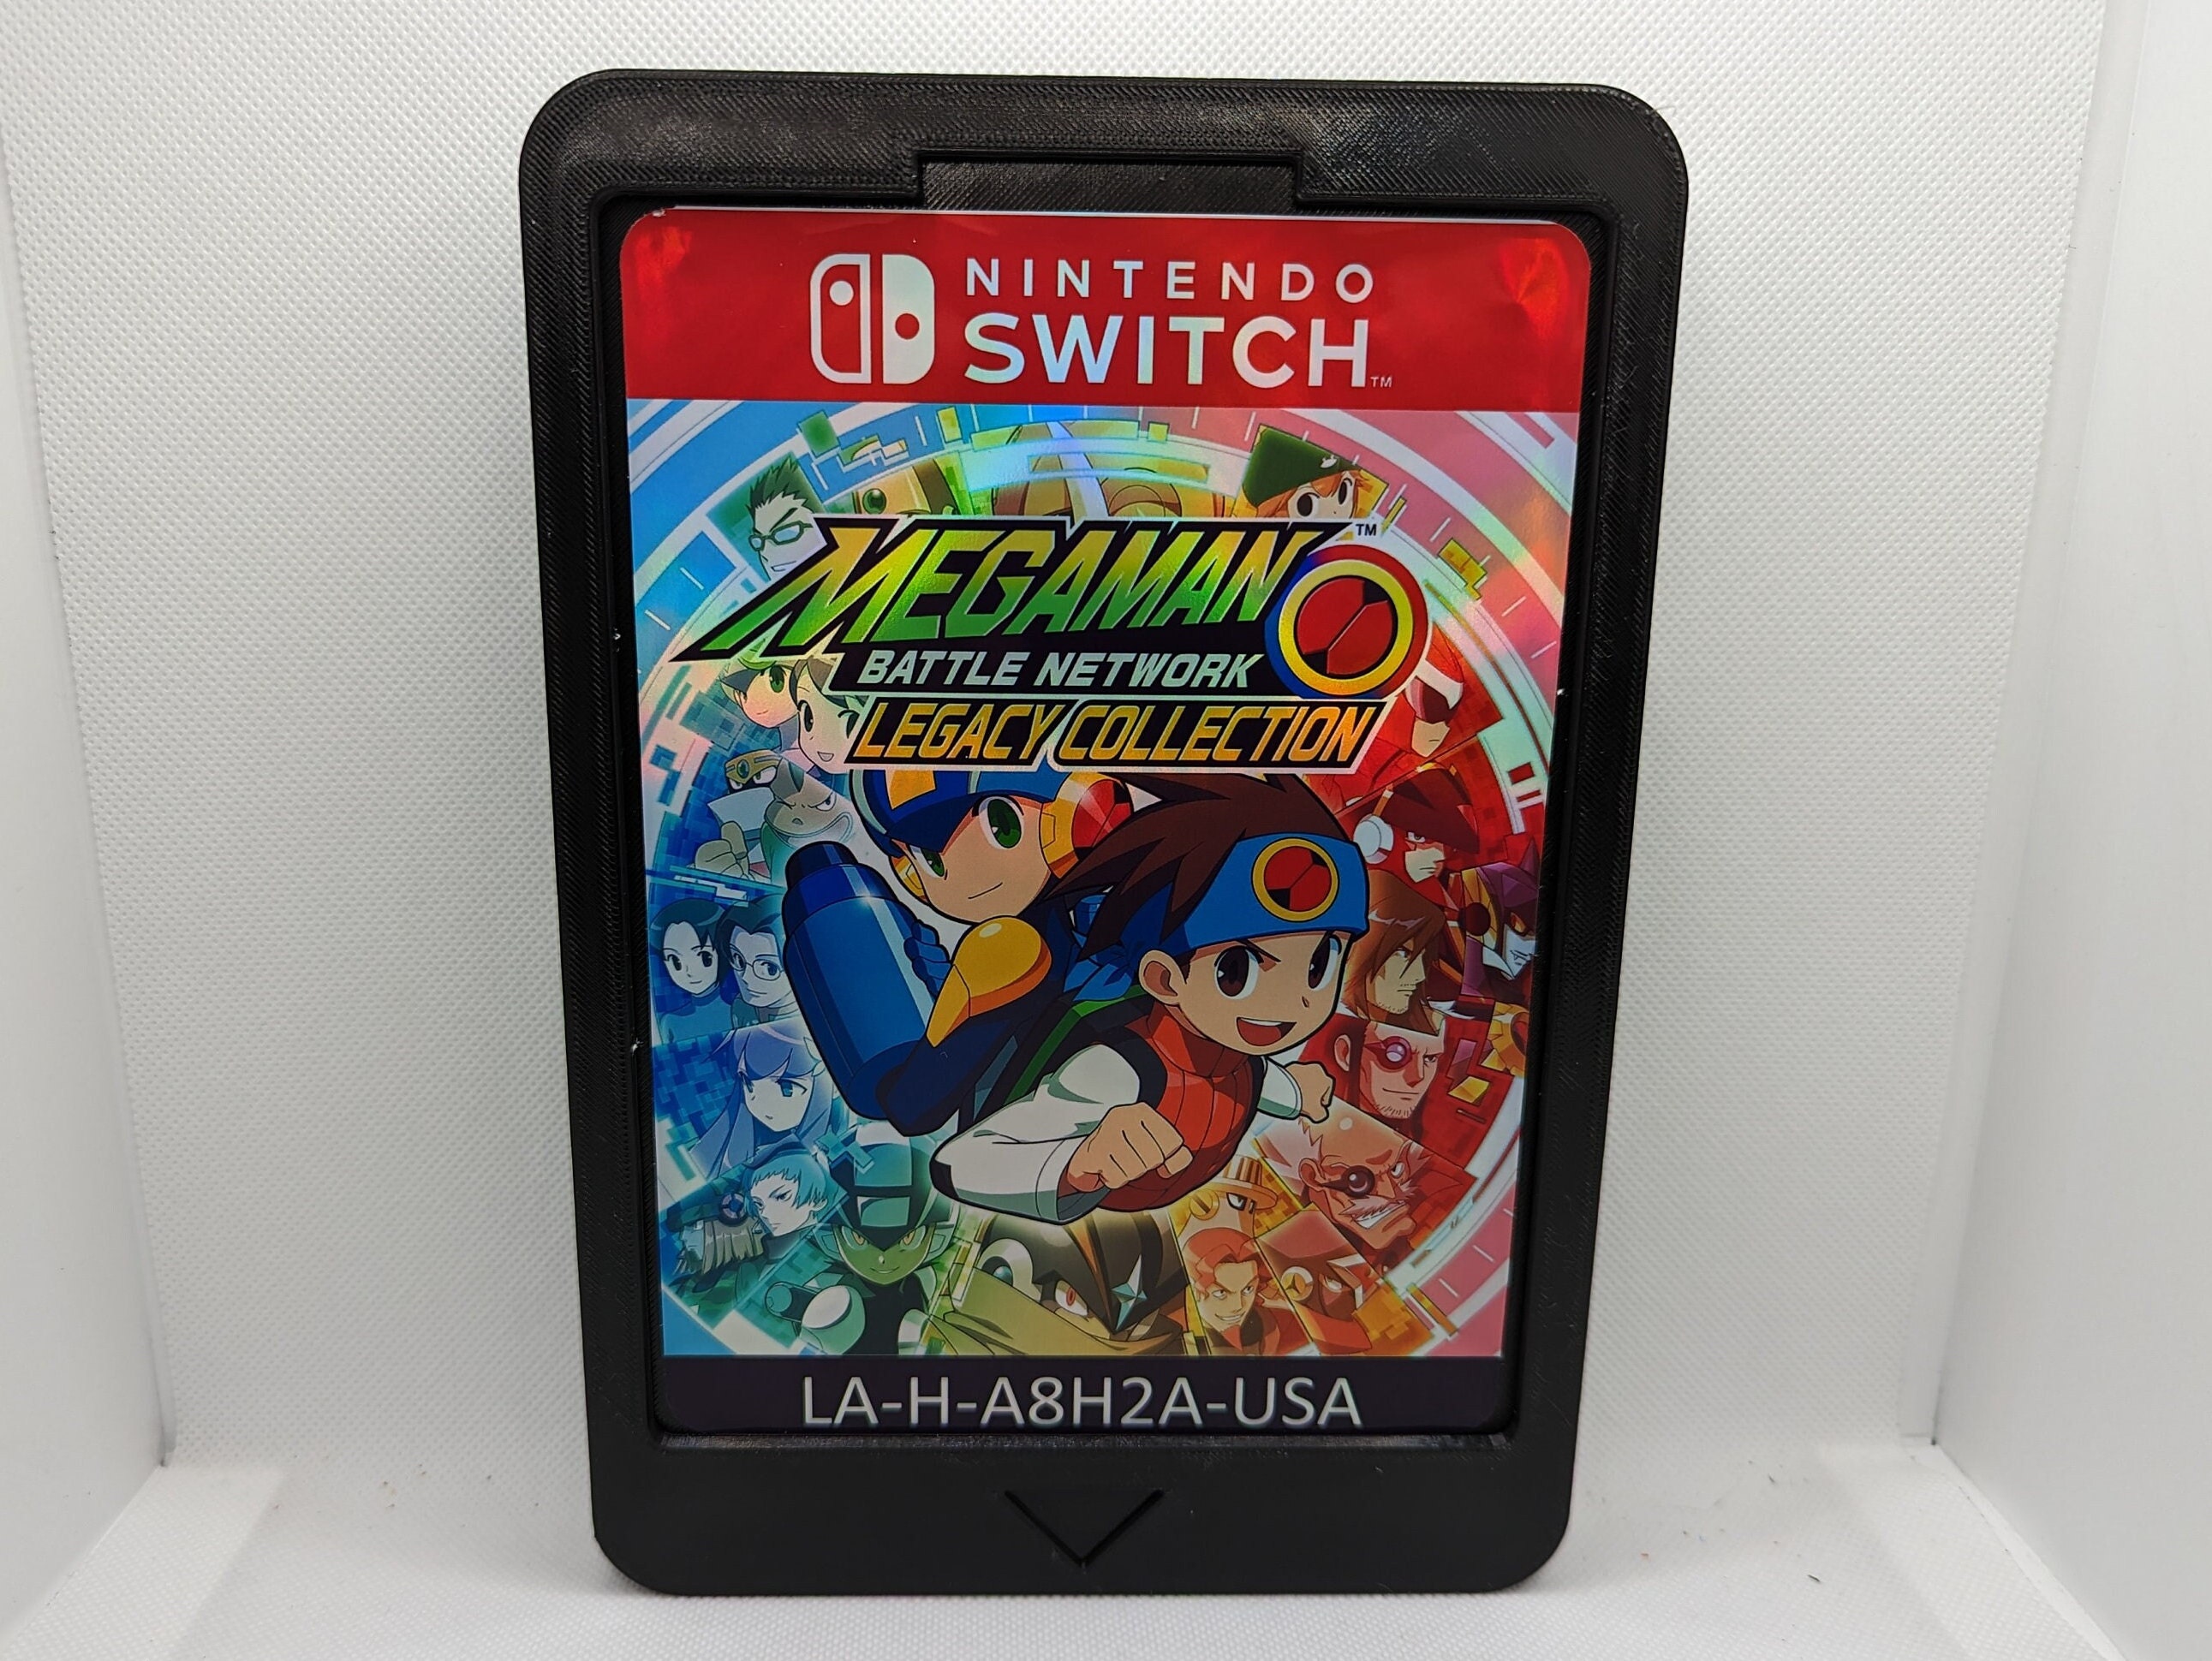 Review  Mega Man Battle Network Legacy Collection - NintendoBoy